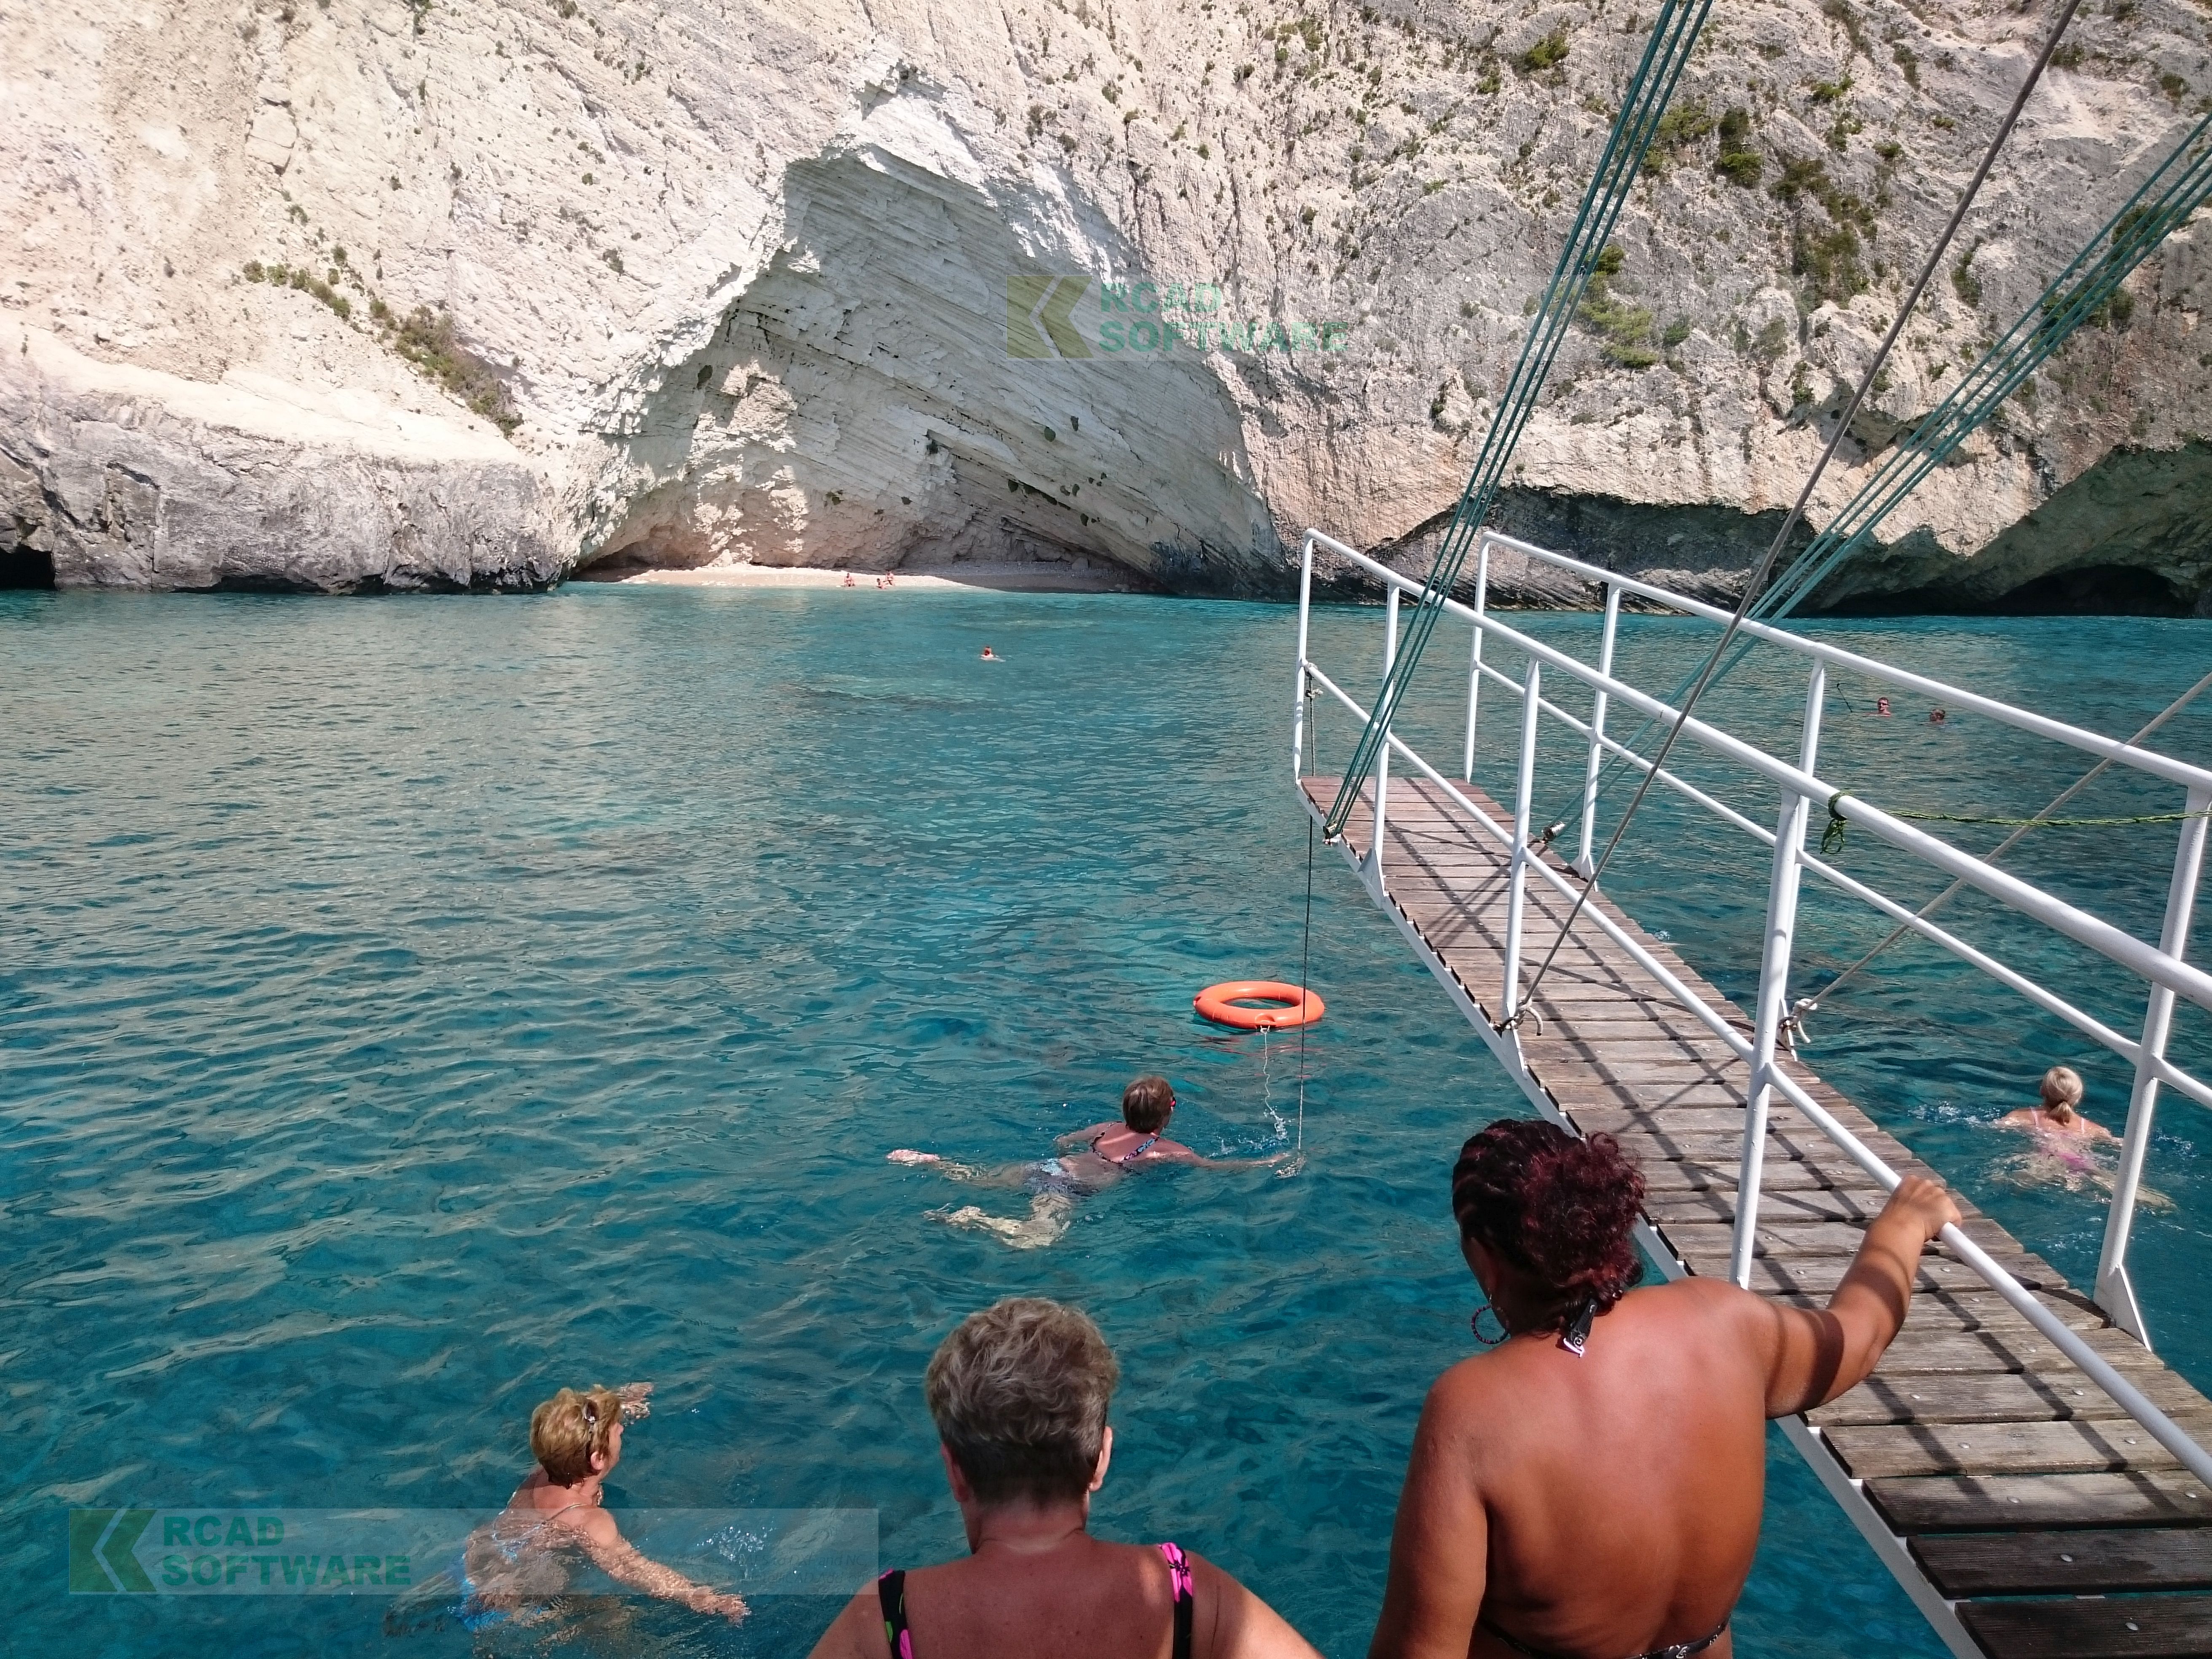 Photos from Keri Caves, Zakynthos island, Greece